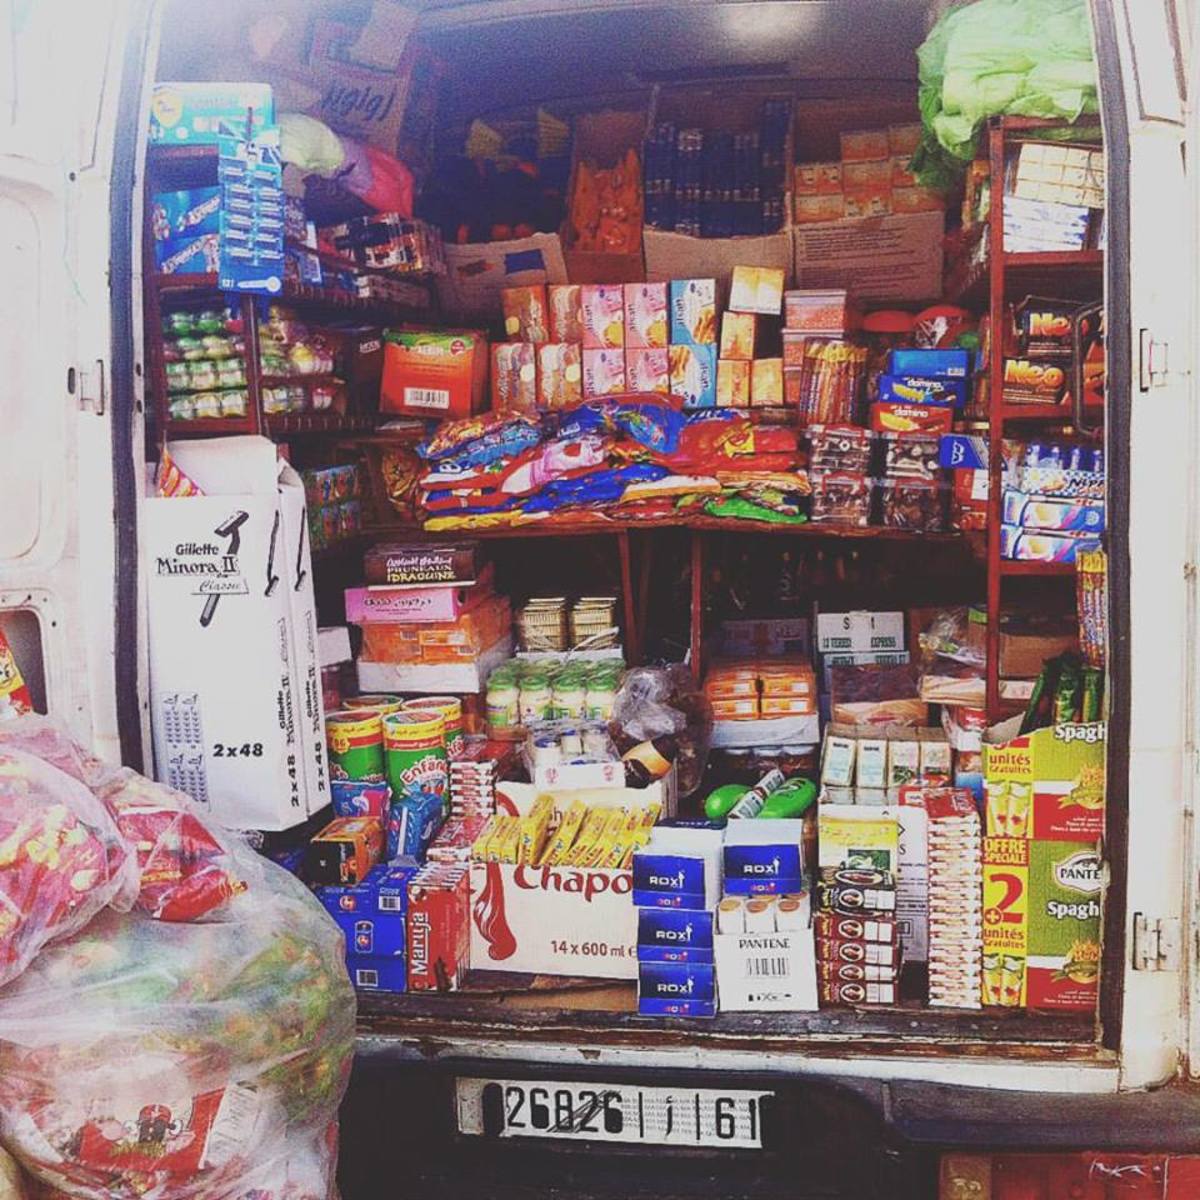 A van delivering supplies to a local shop.  